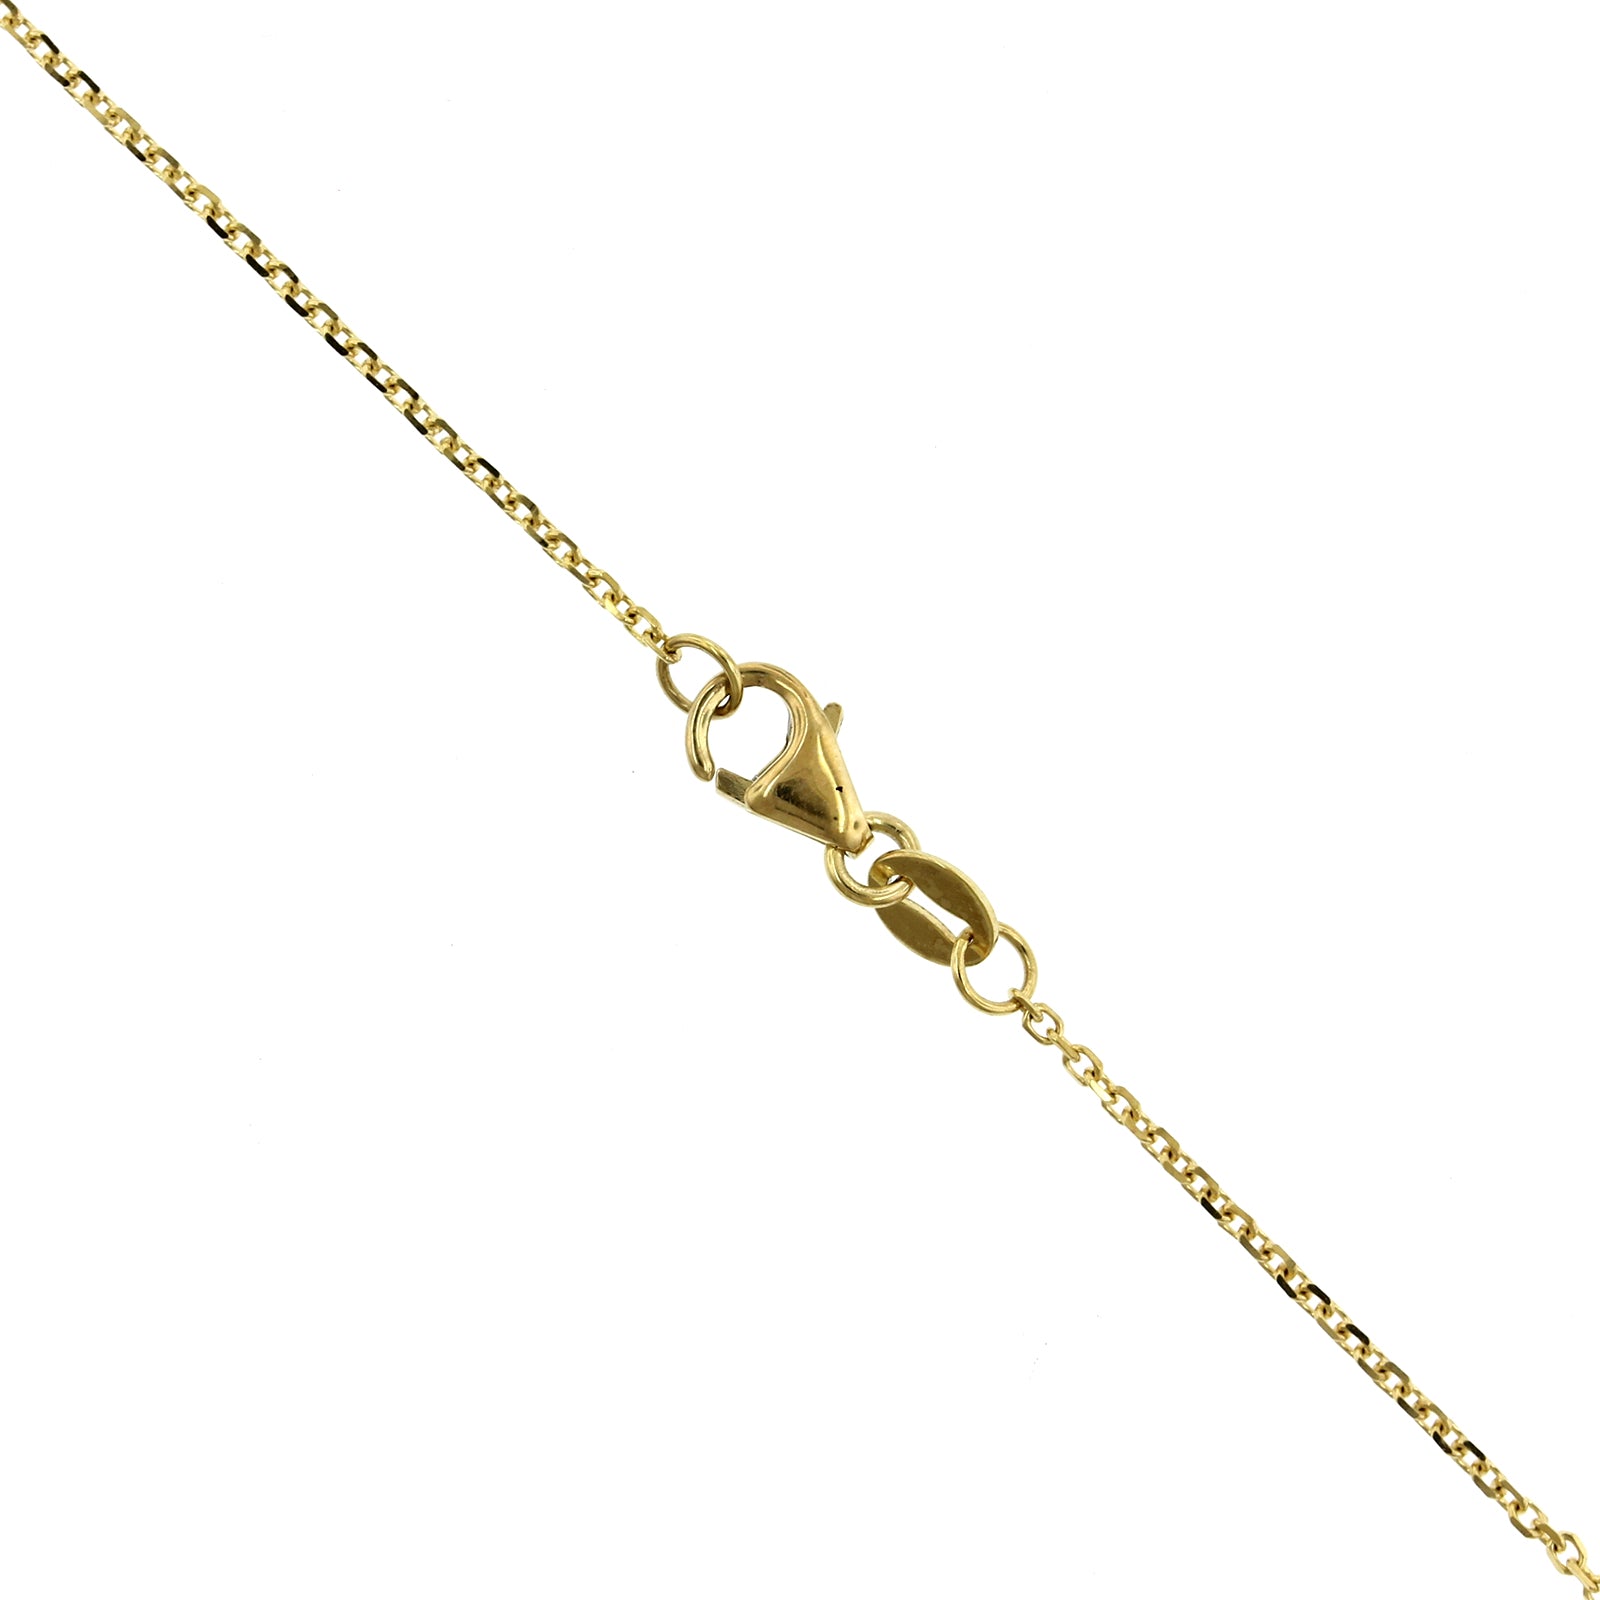 14K Yellow Gold Diamond Bezel Necklace